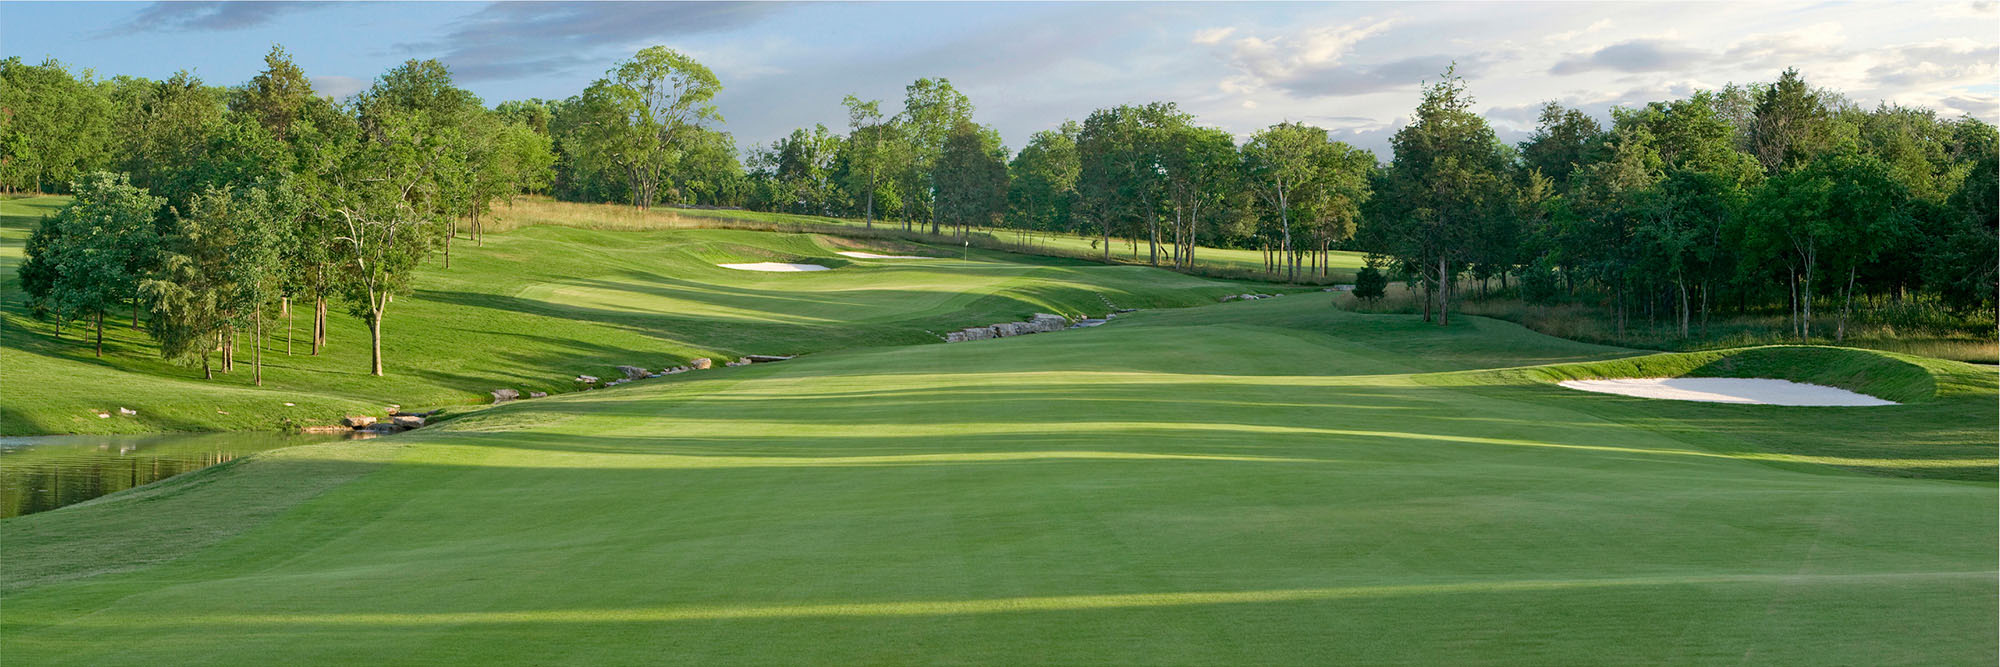 Golf Course Image - Fairvue Plantation F No. 14